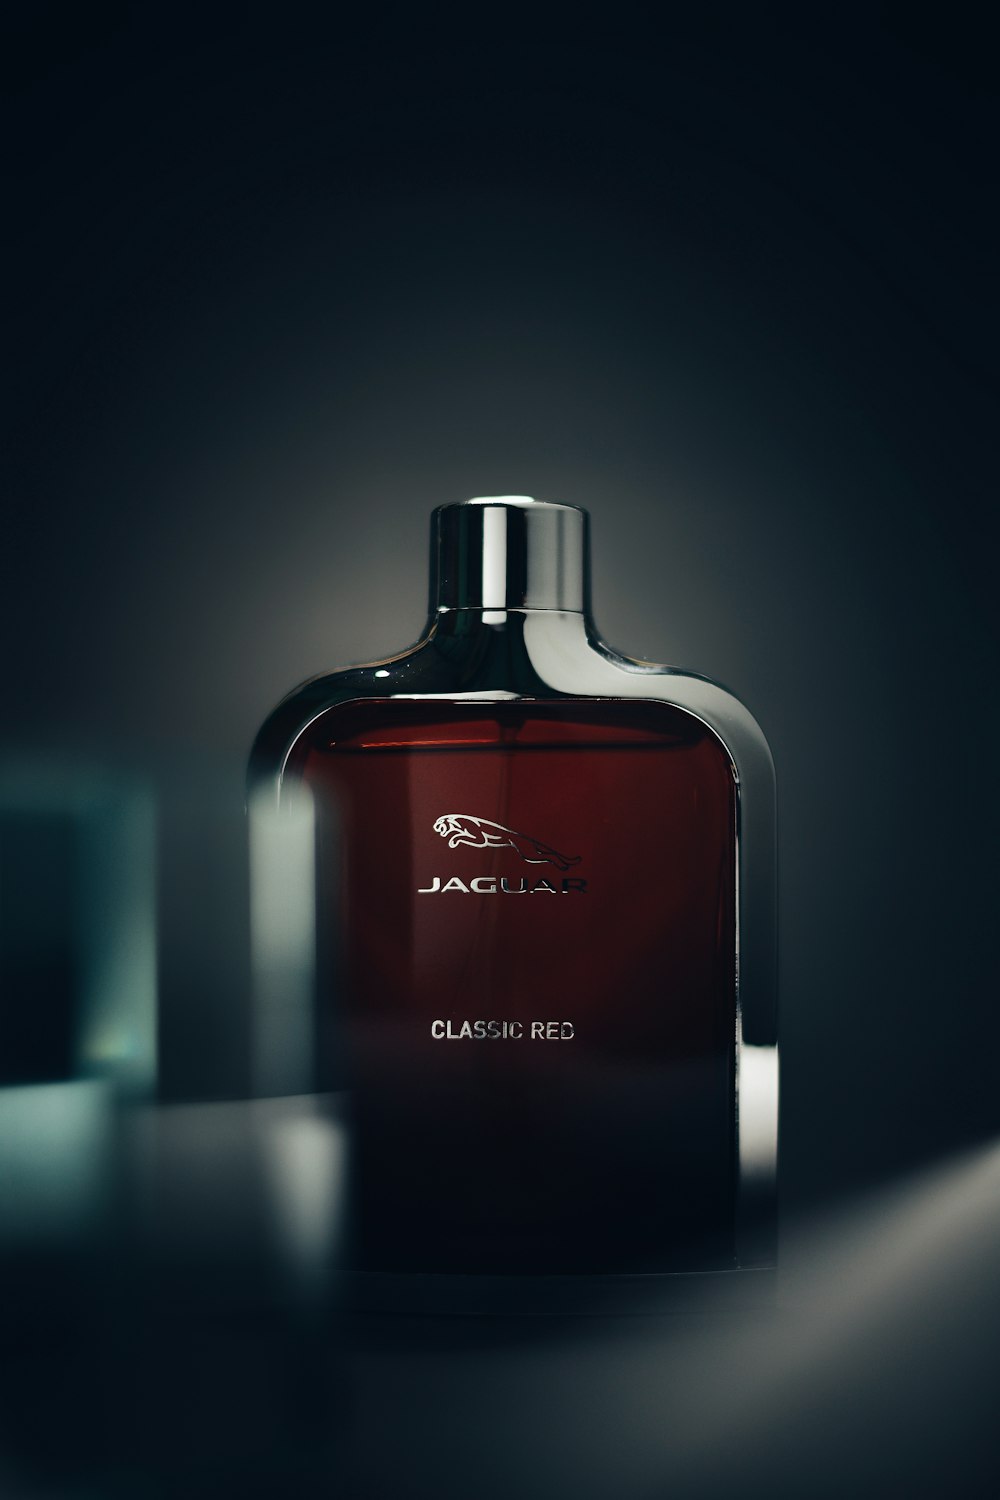 Jaguar Classic Red fragrance bottle